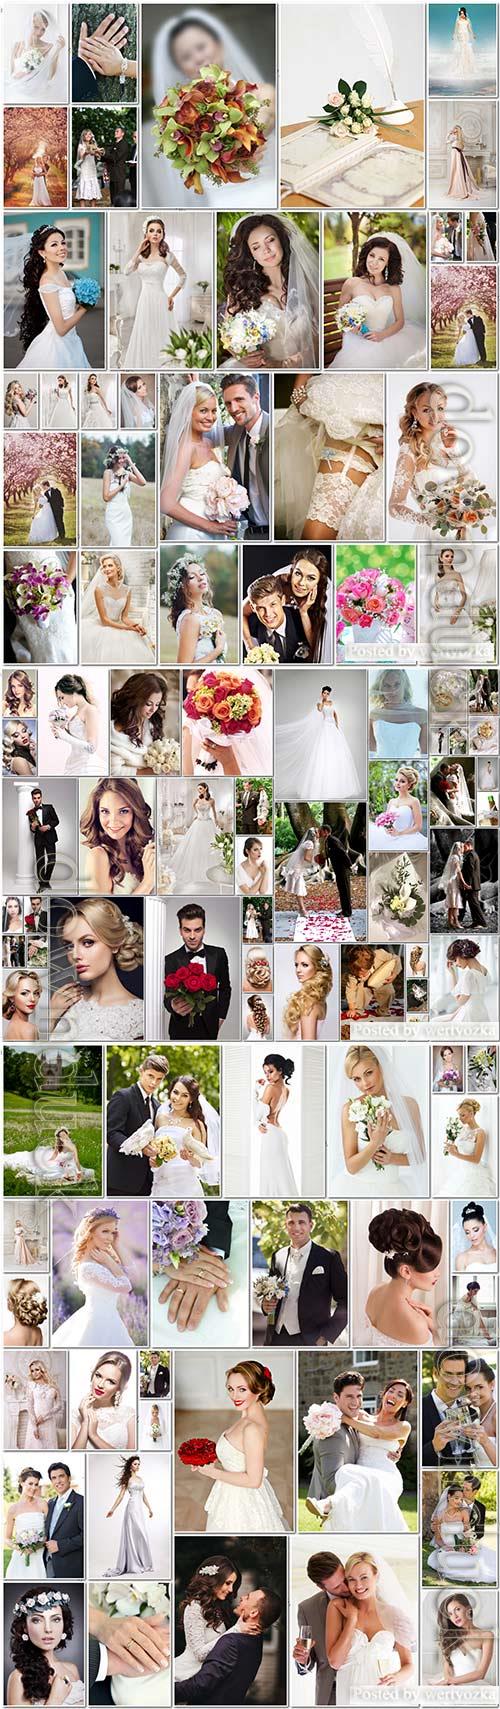 100 Bundle beautiful bride and groom, wedding stock photo vol 1